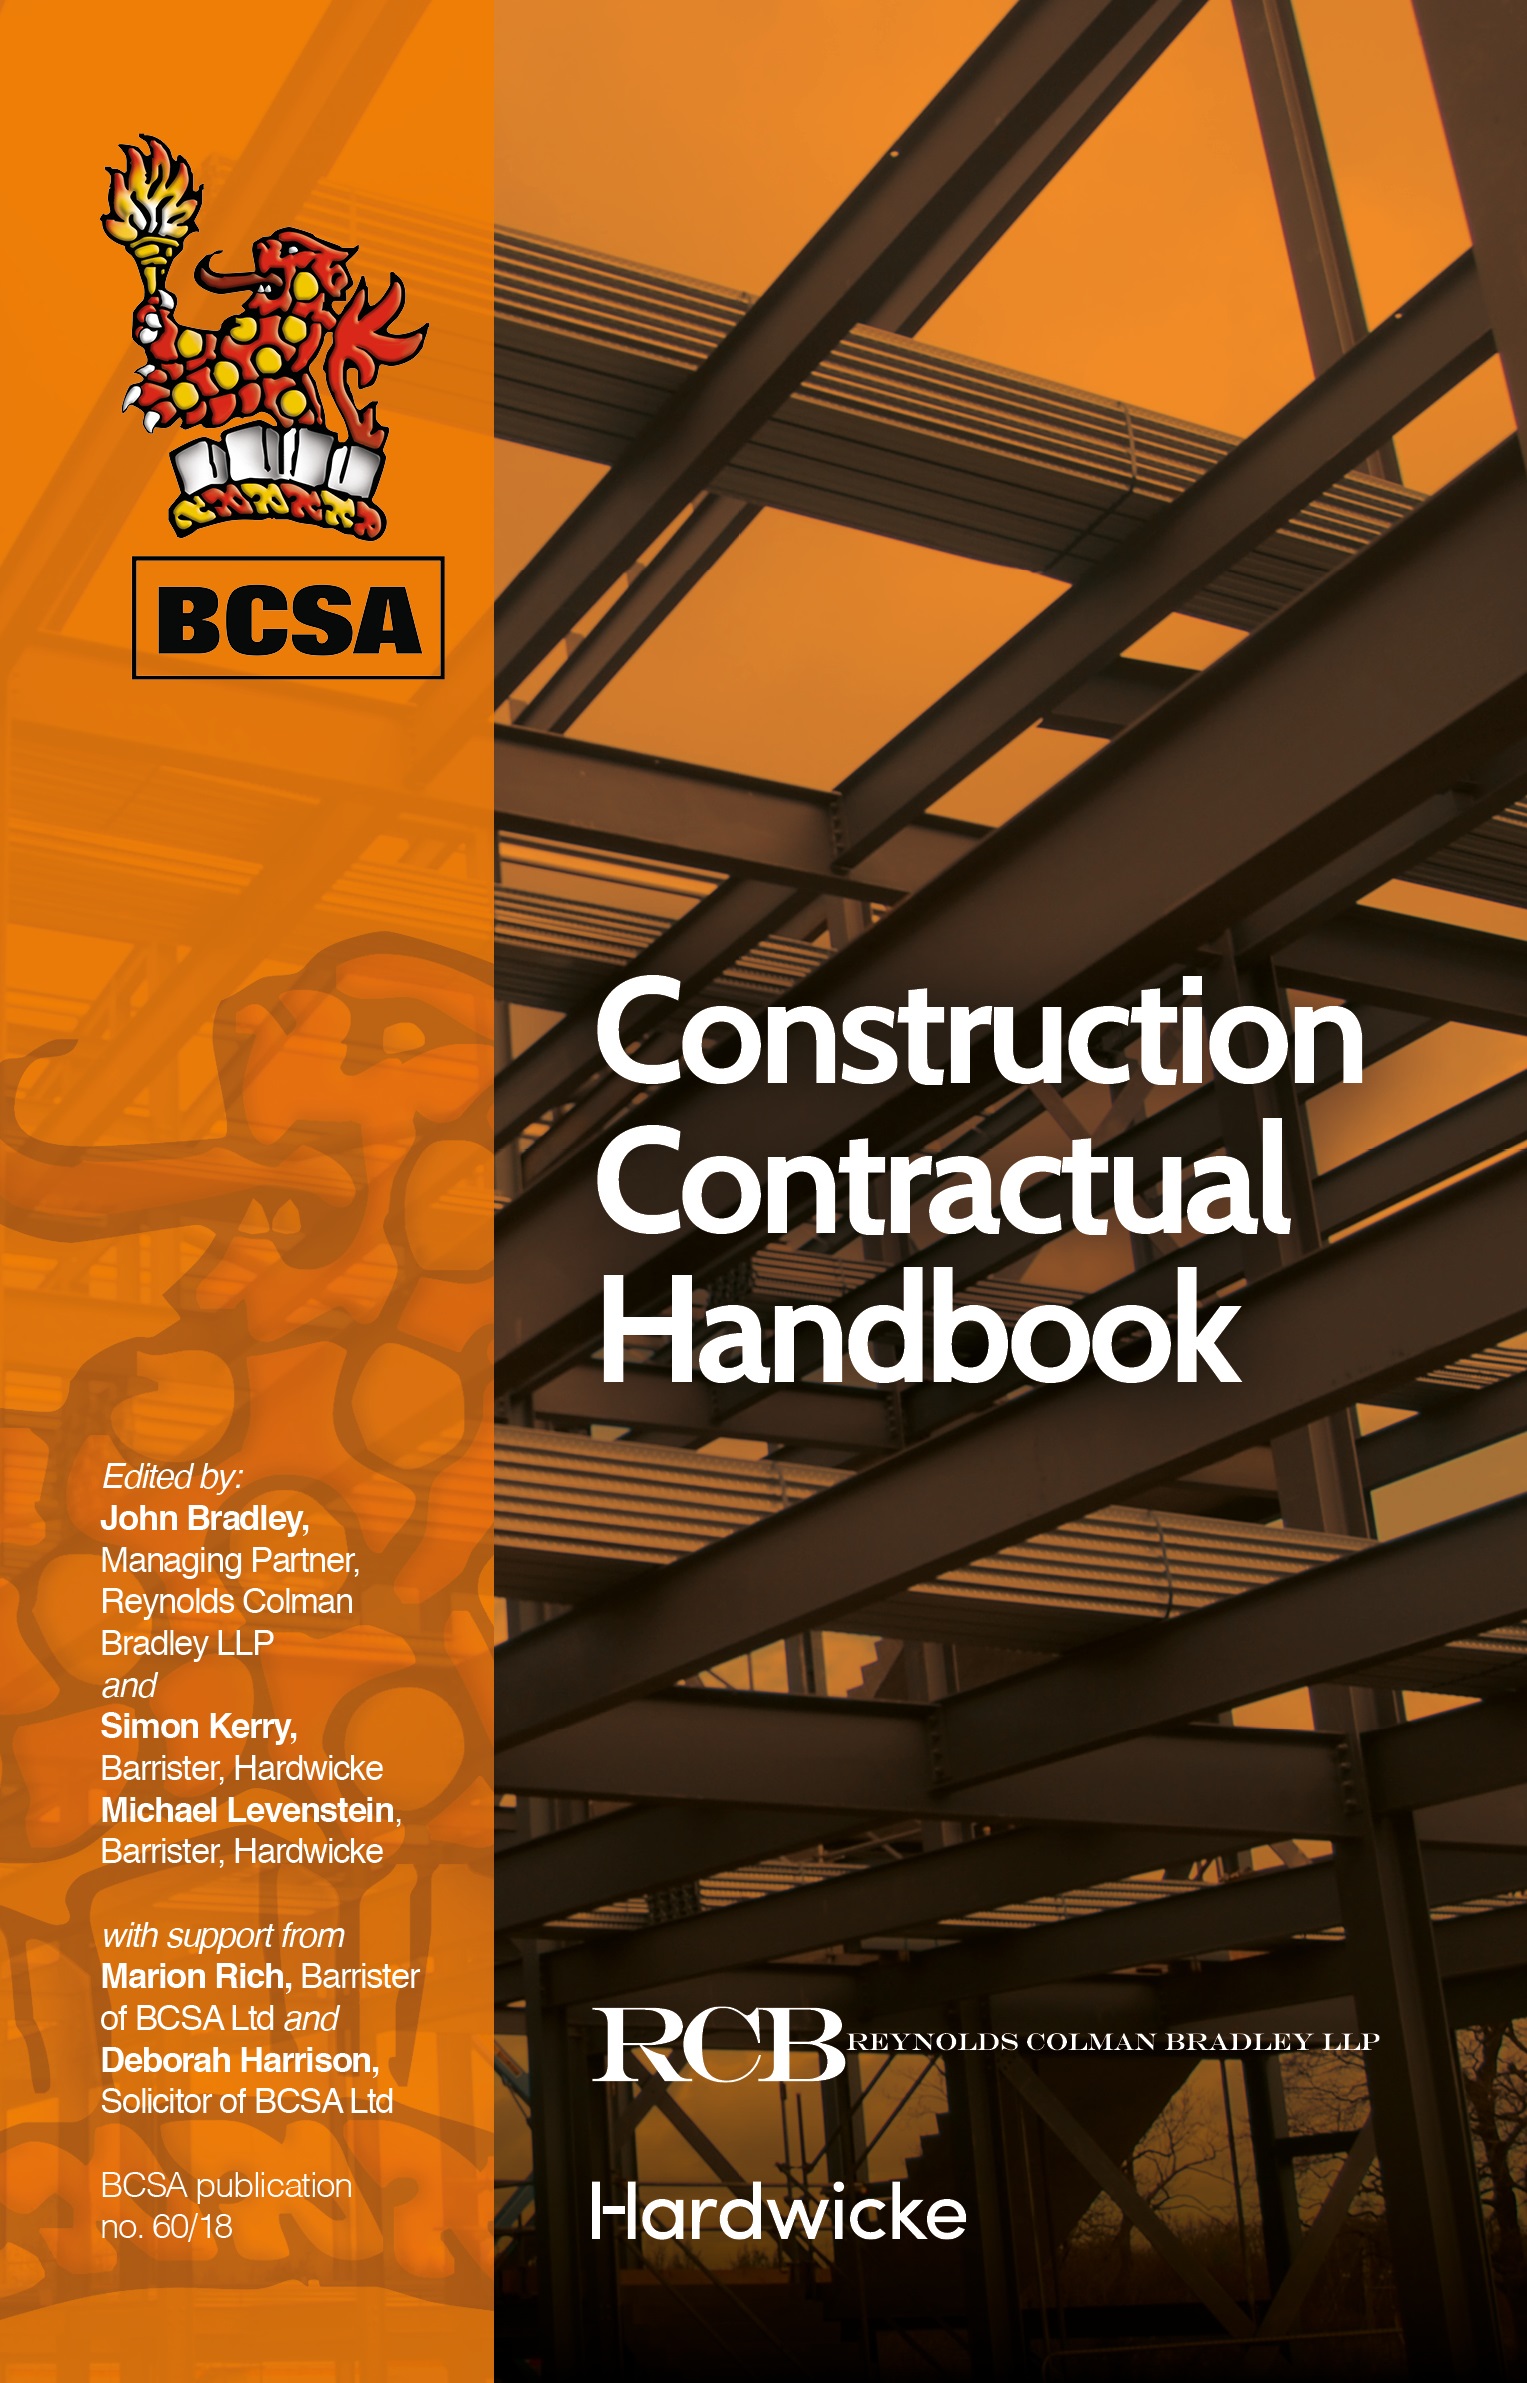 FIS members receive 10% discount off Construction Contractual Handbook